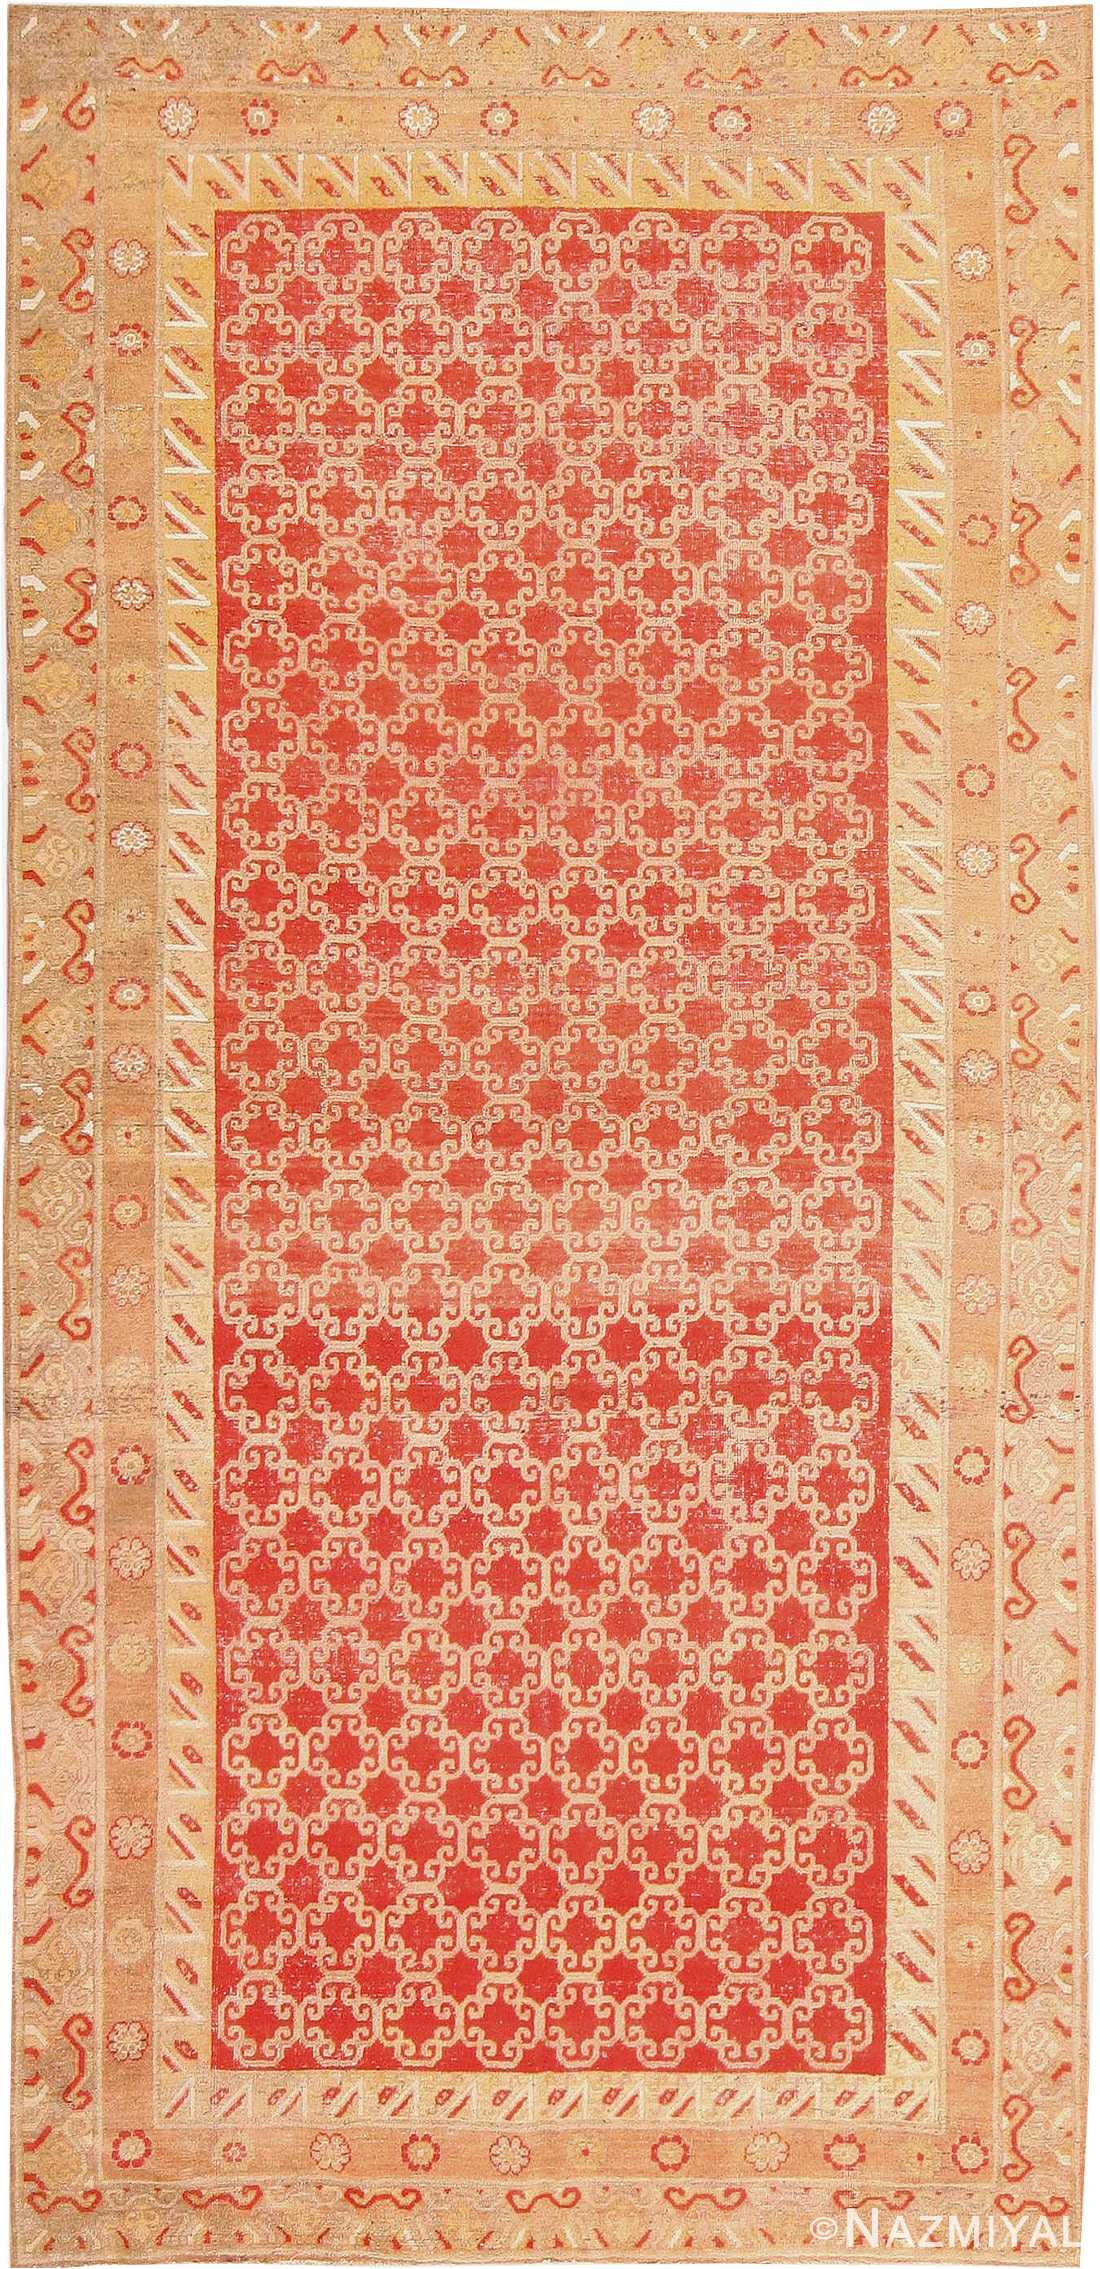 Long and Narrow Sunny Red Antique Khotan Rug #41865 by Nazmiyal Antique Rugs